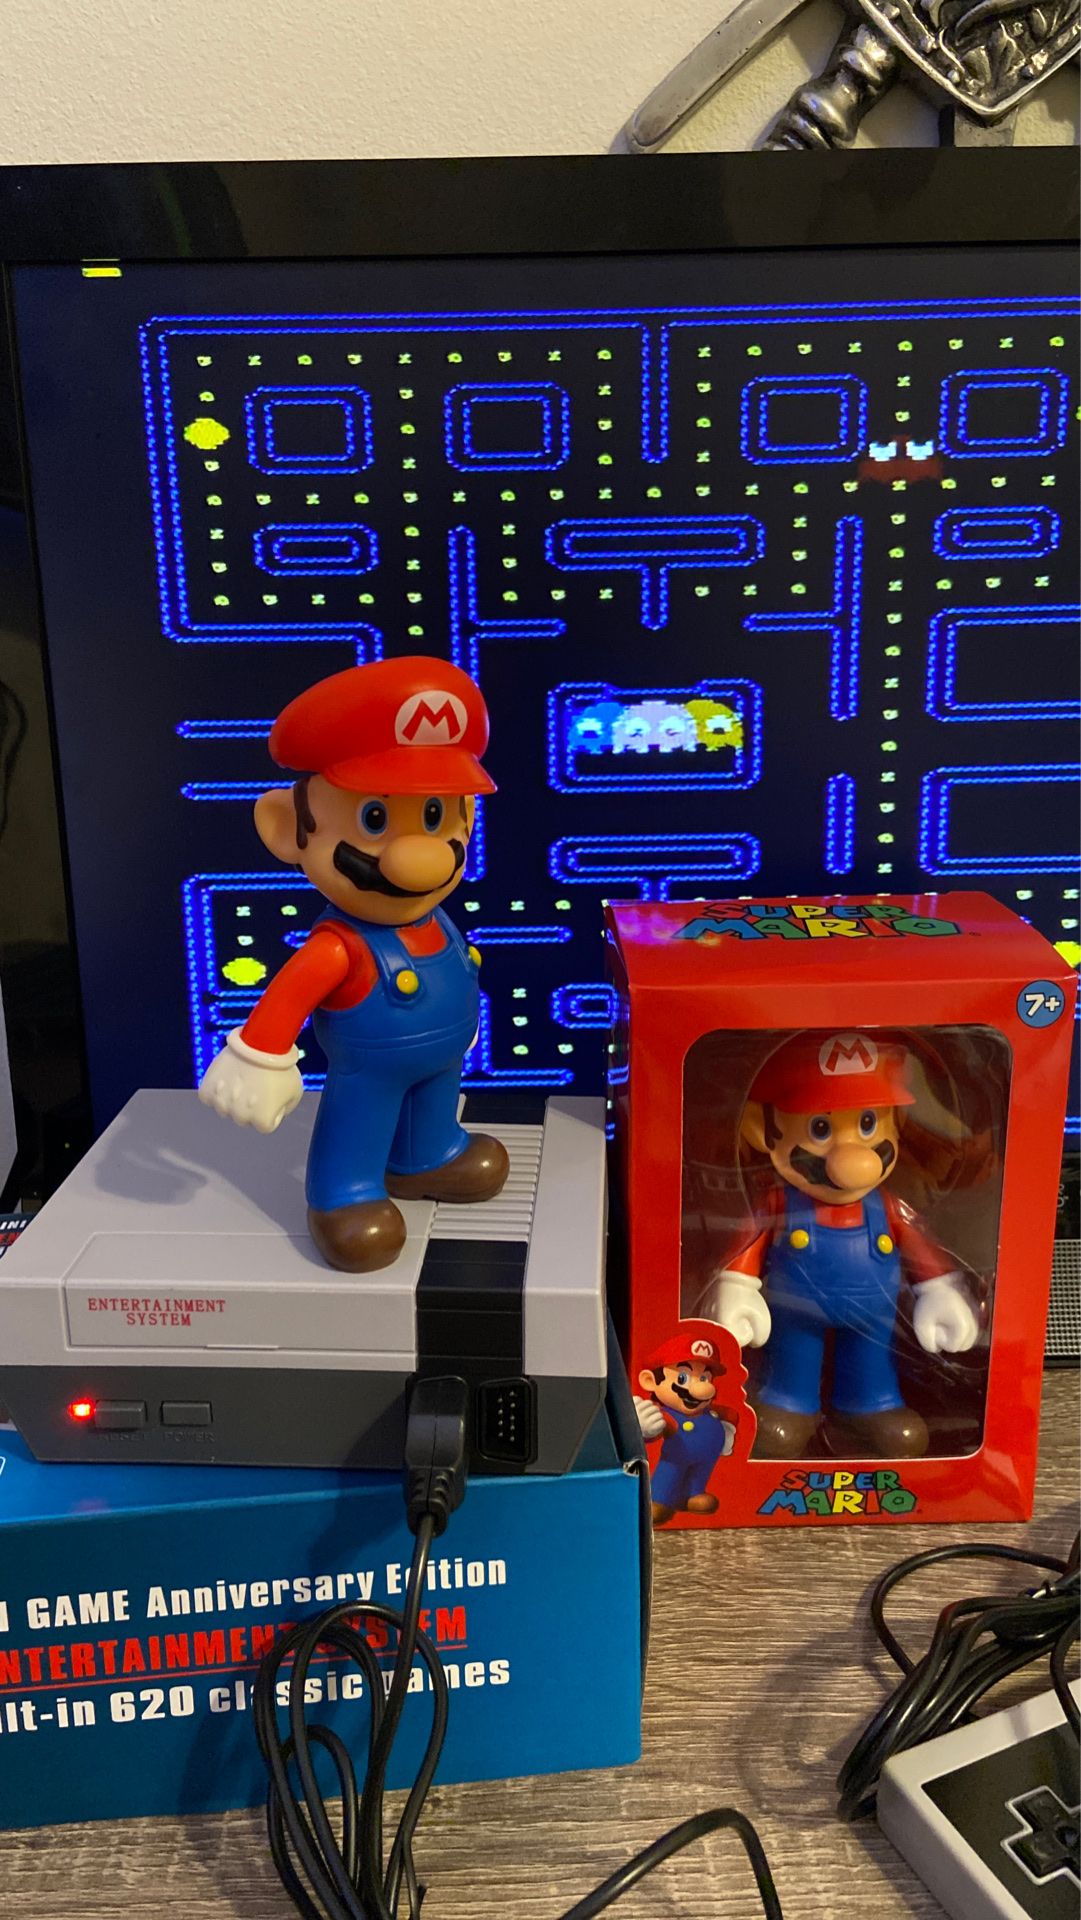 Arcade Video Game Classic Anniversary Edition Mini-Nintendo + Mario figure included